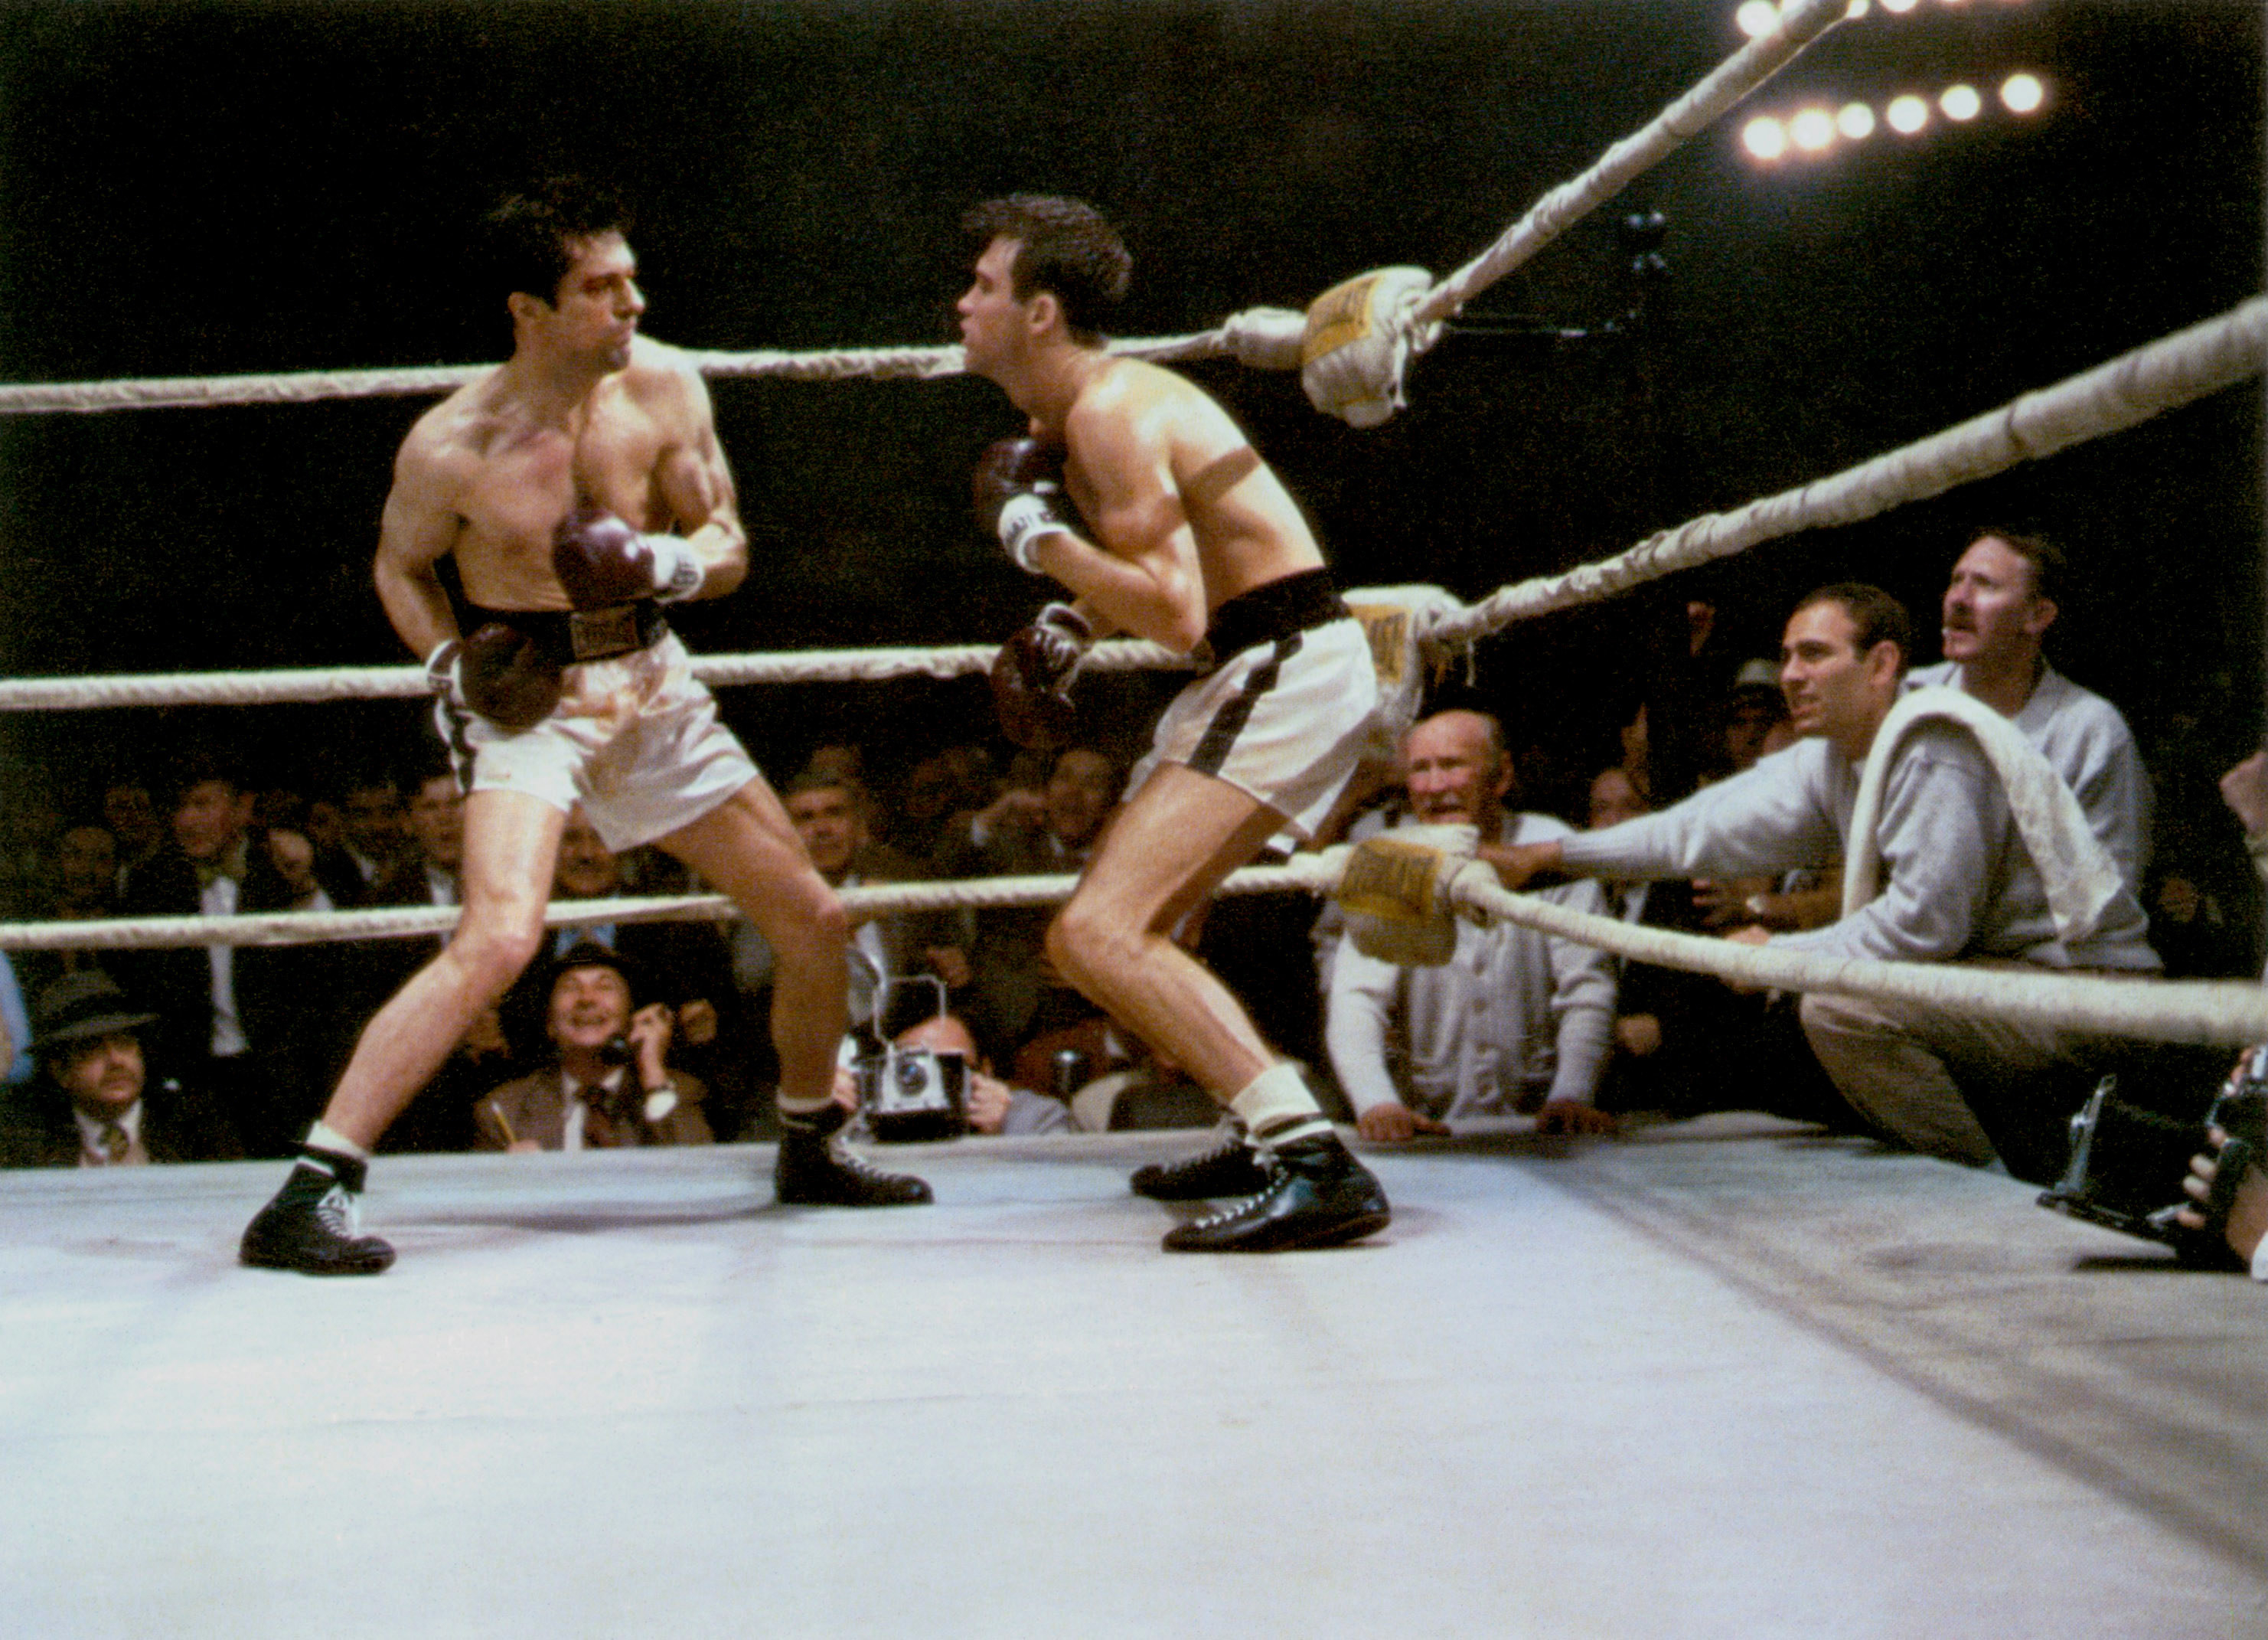 Robert DeNiro in a boxing match